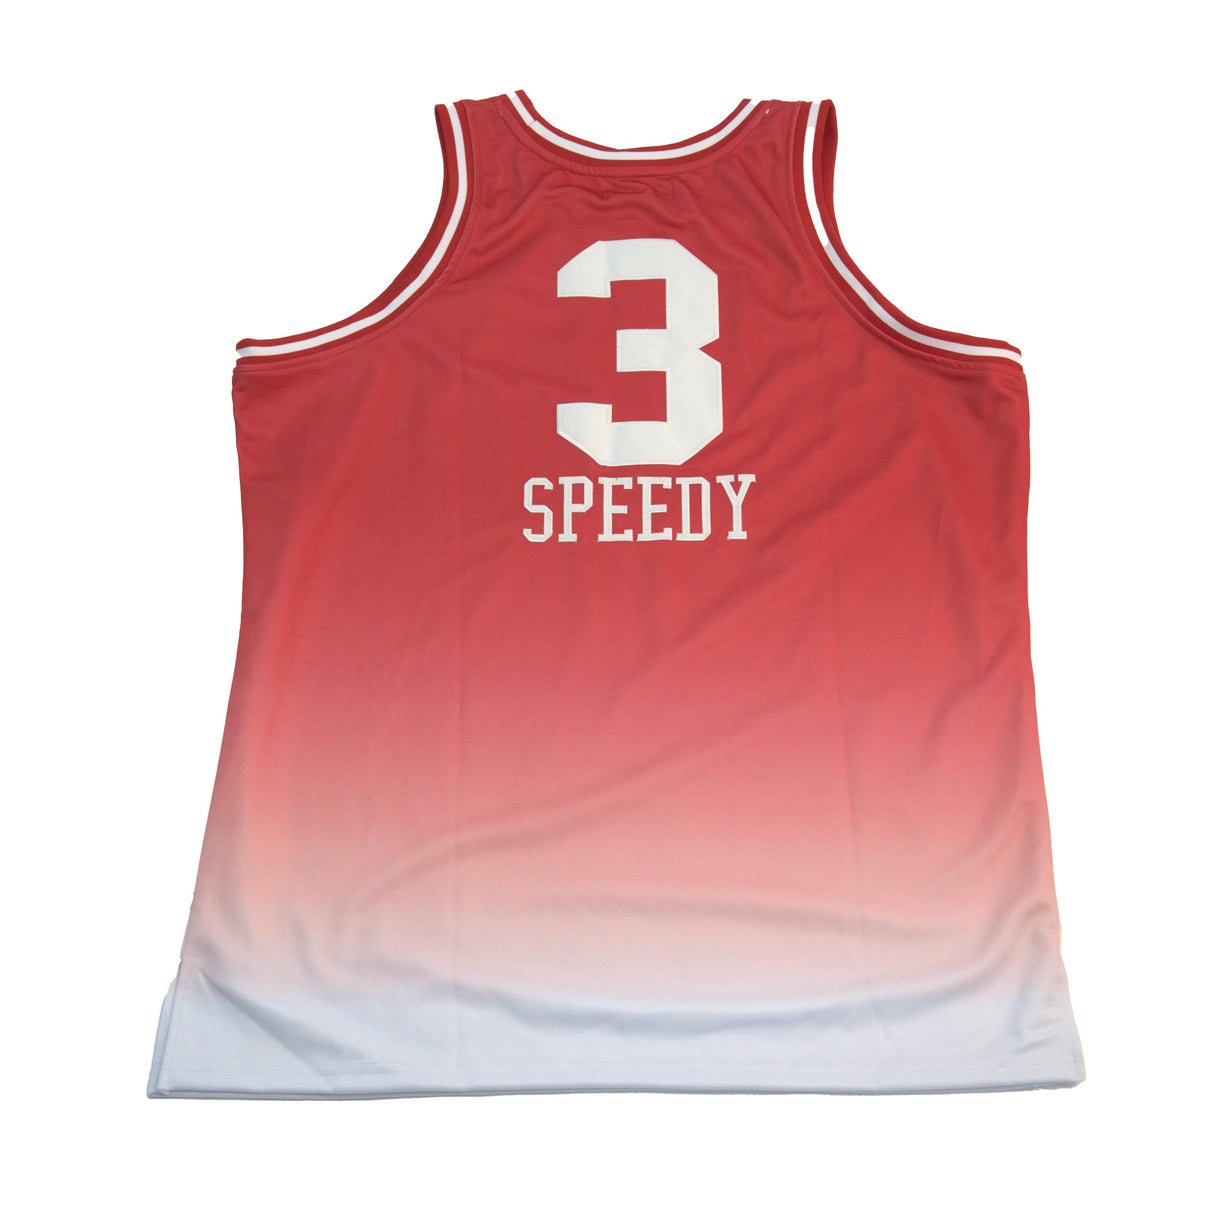 SPEEDY PHILA BASKETBALL JERSEY (RED)